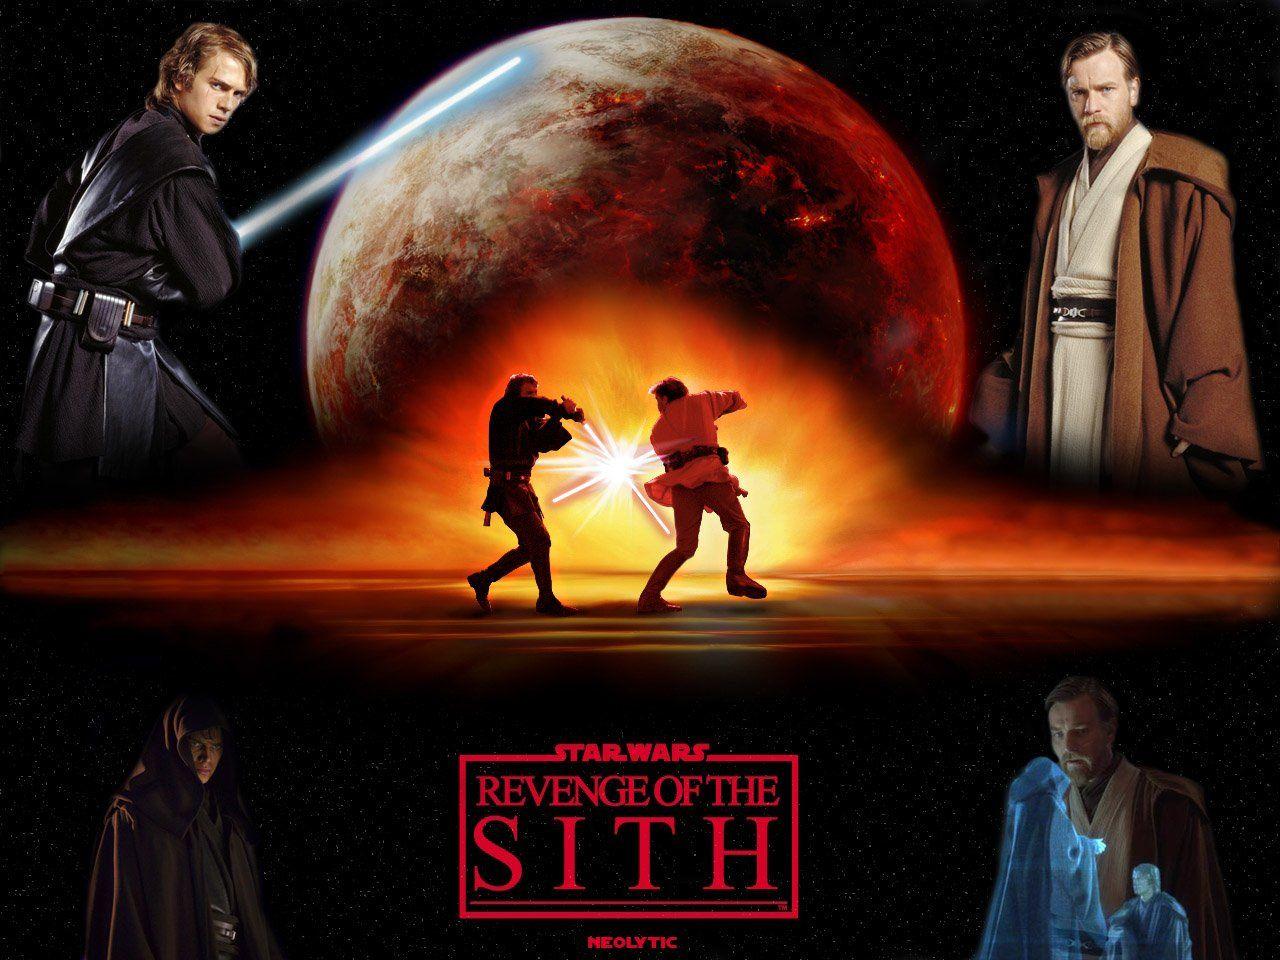 Star Wars Episode Iii: Revenge Of The Sith Wallpapers